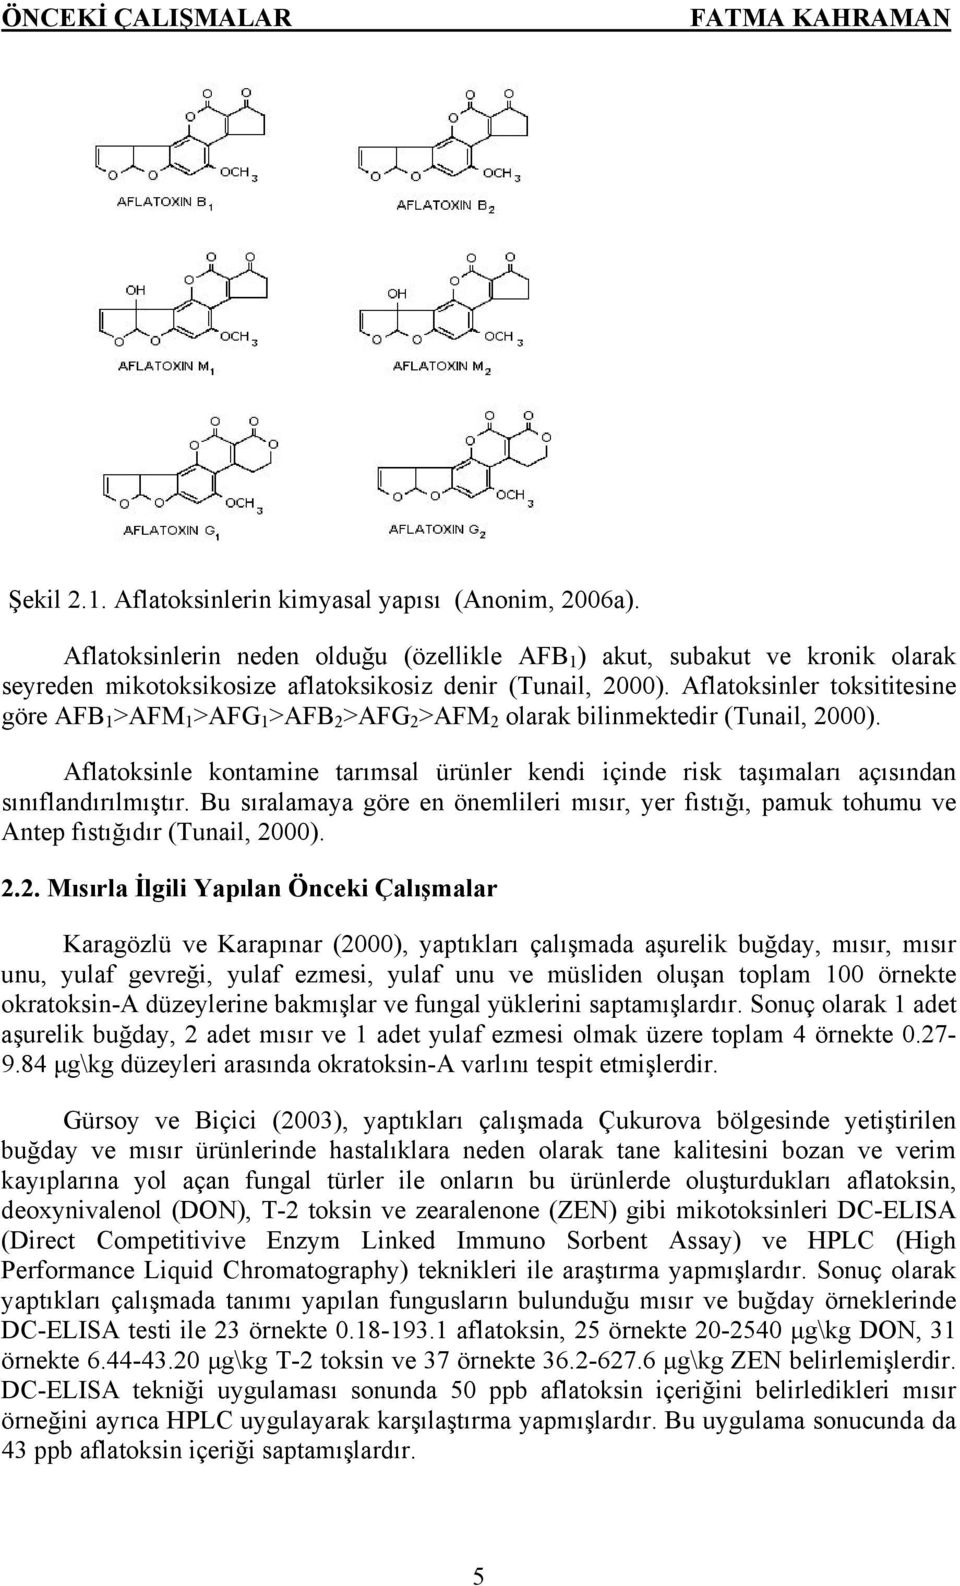 Aflatoksinler toksititesine göre AFB 1 >AFM 1 >AFG 1 >AFB 2 >AFG 2 >AFM 2 olarak bilinmektedir (Tunail, 2000).